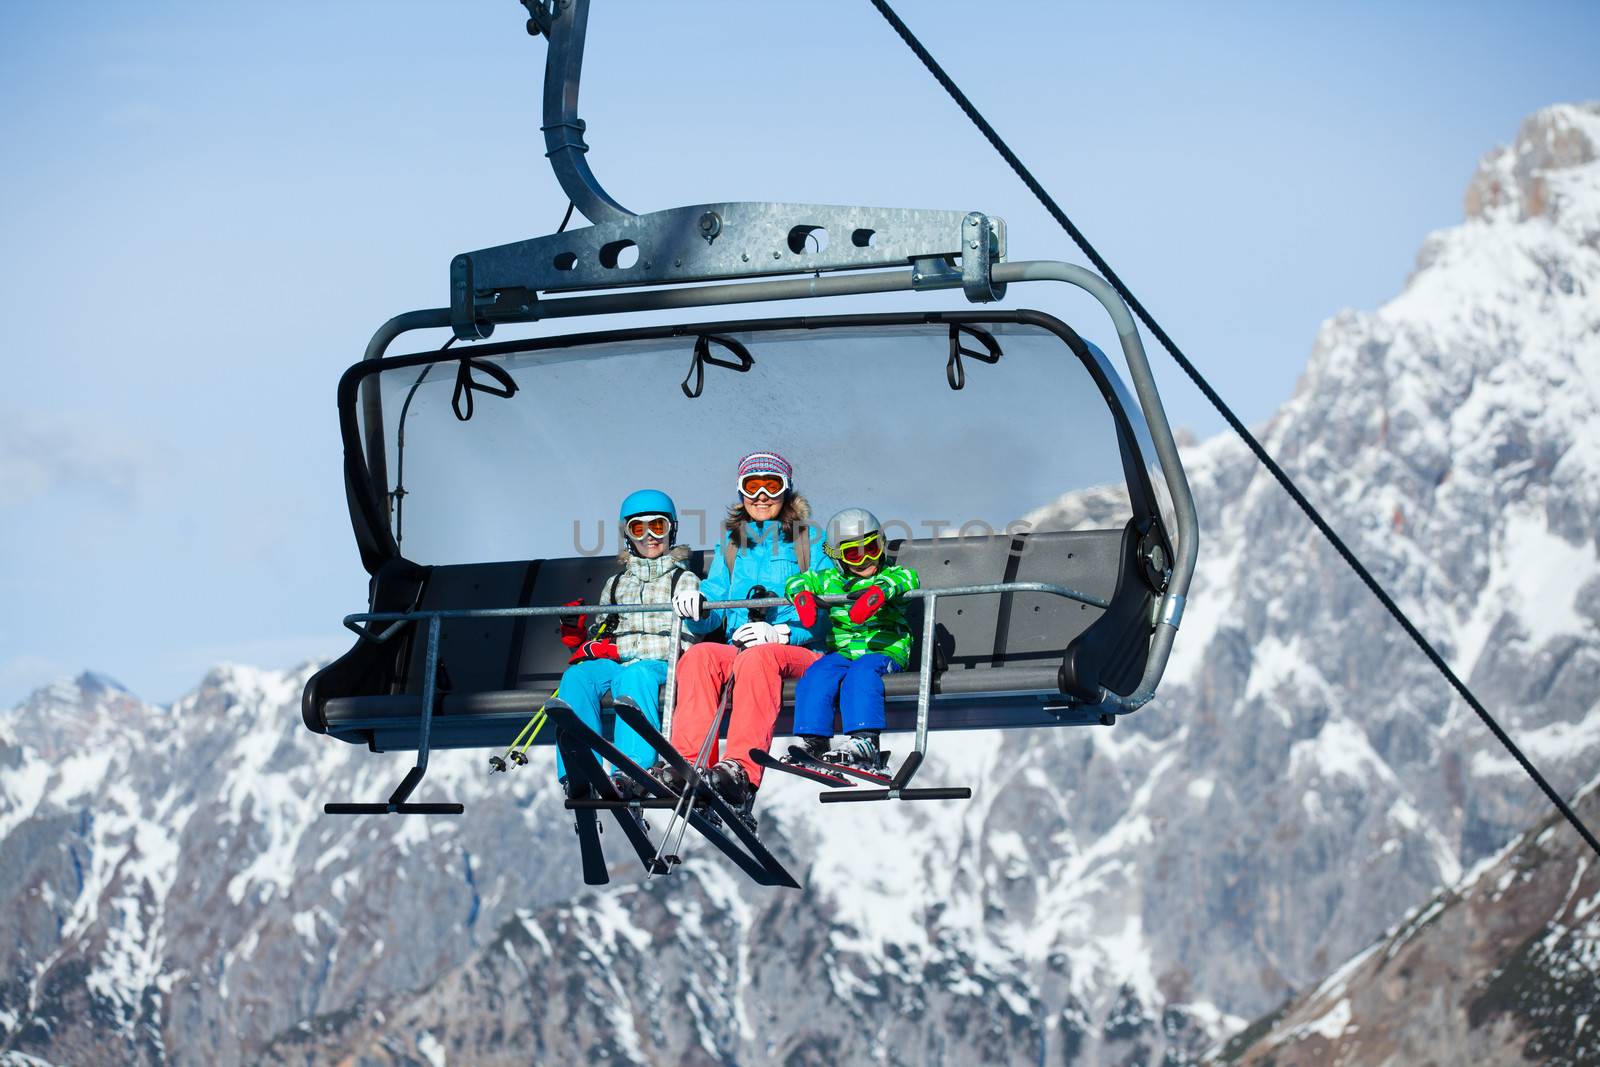 Skiers on a ski lift. by maxoliki